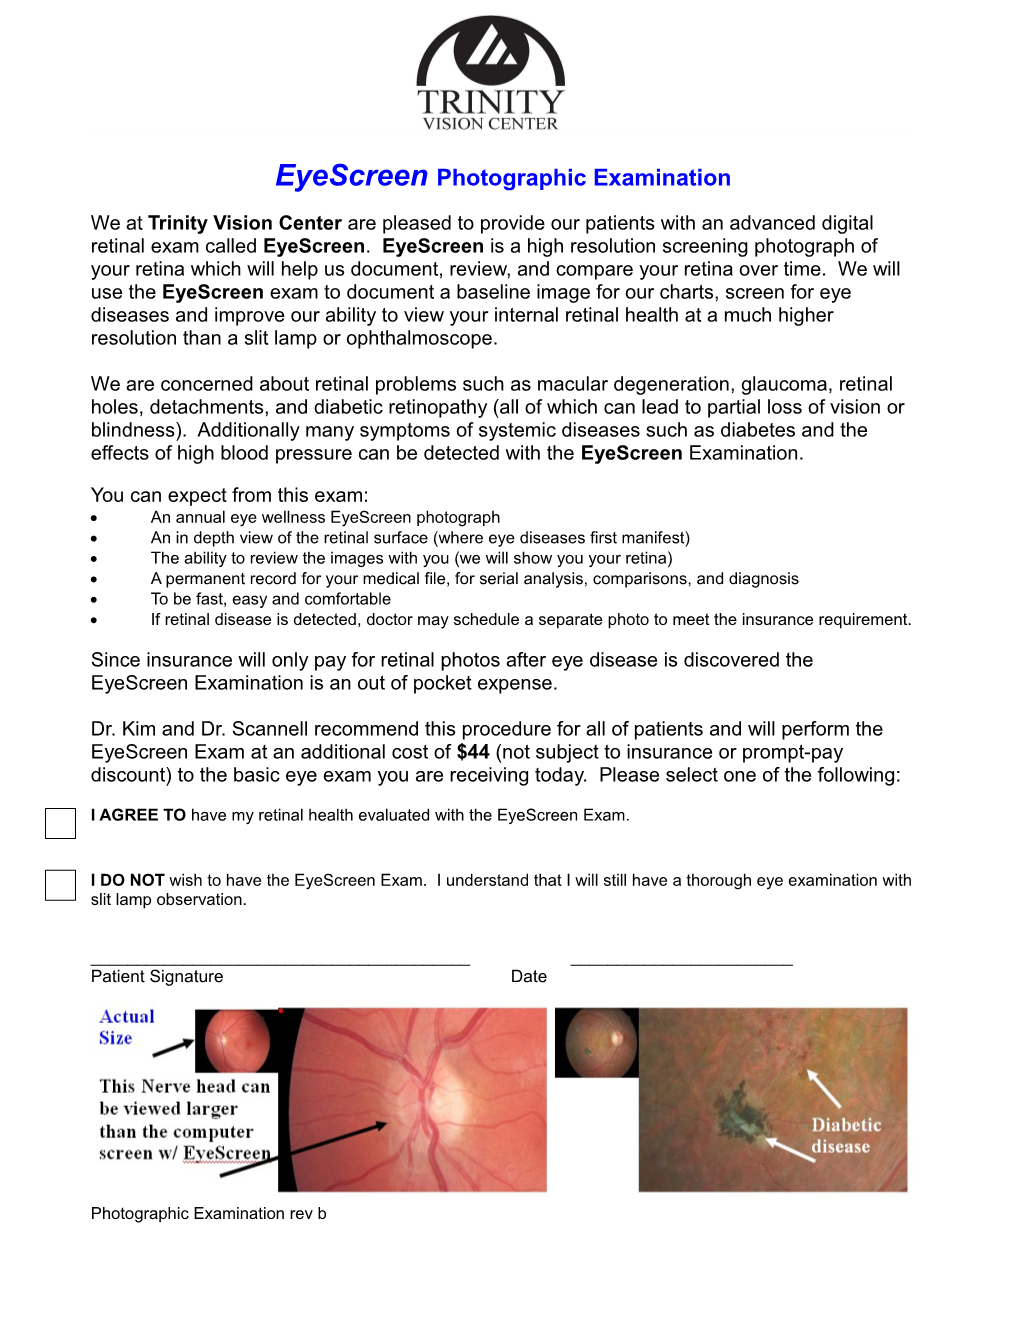 Digital Retinal Photographic Examination